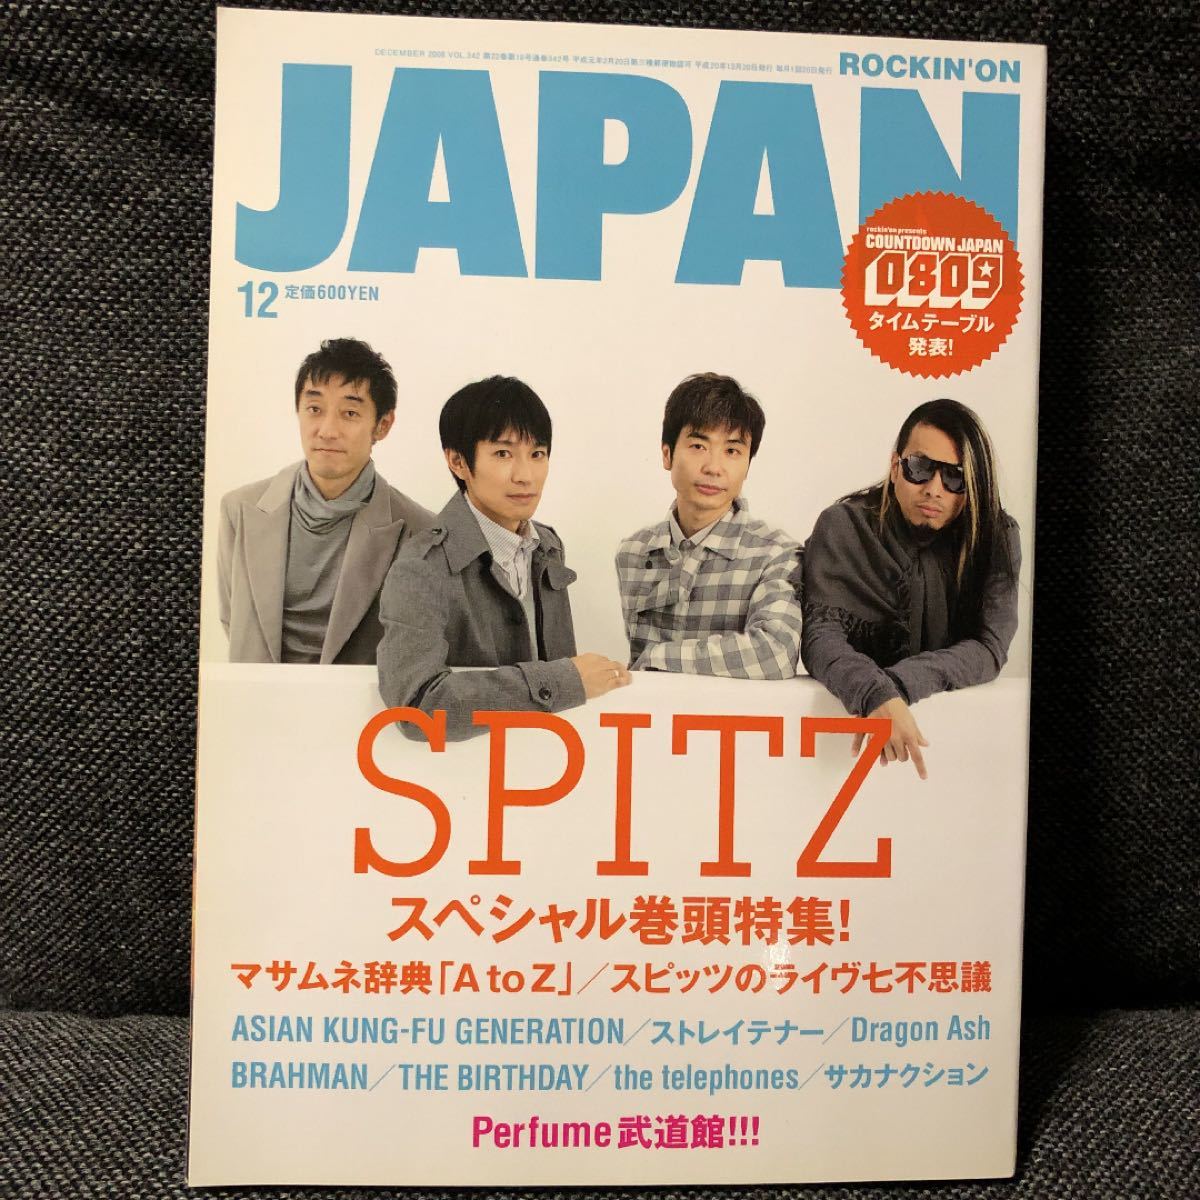 ROCKIN'ON JAPAN SPITZ スピッツ